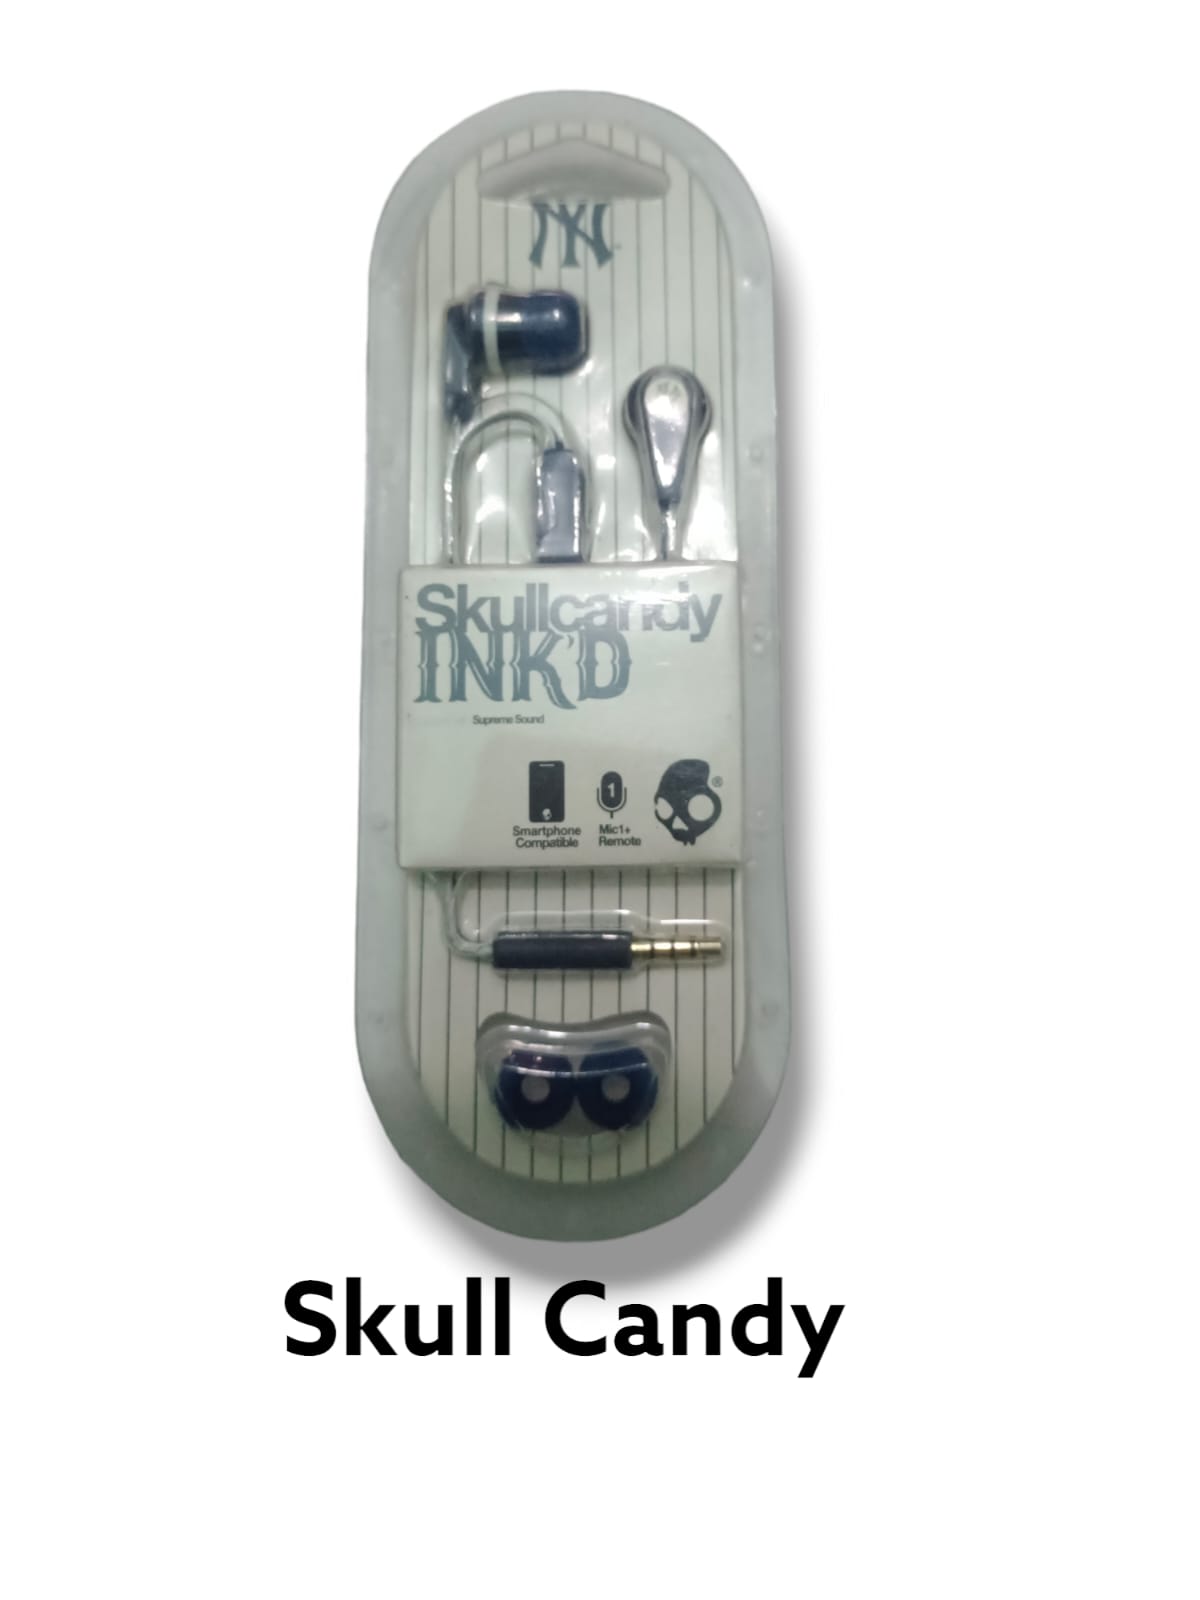 100% Original Skull Candy Handsfree Skullcandy jib Ink’d Wired 3.5mm Earphones Skullcandy Ink'd+ Wired In-Ear Earbuds With Mic